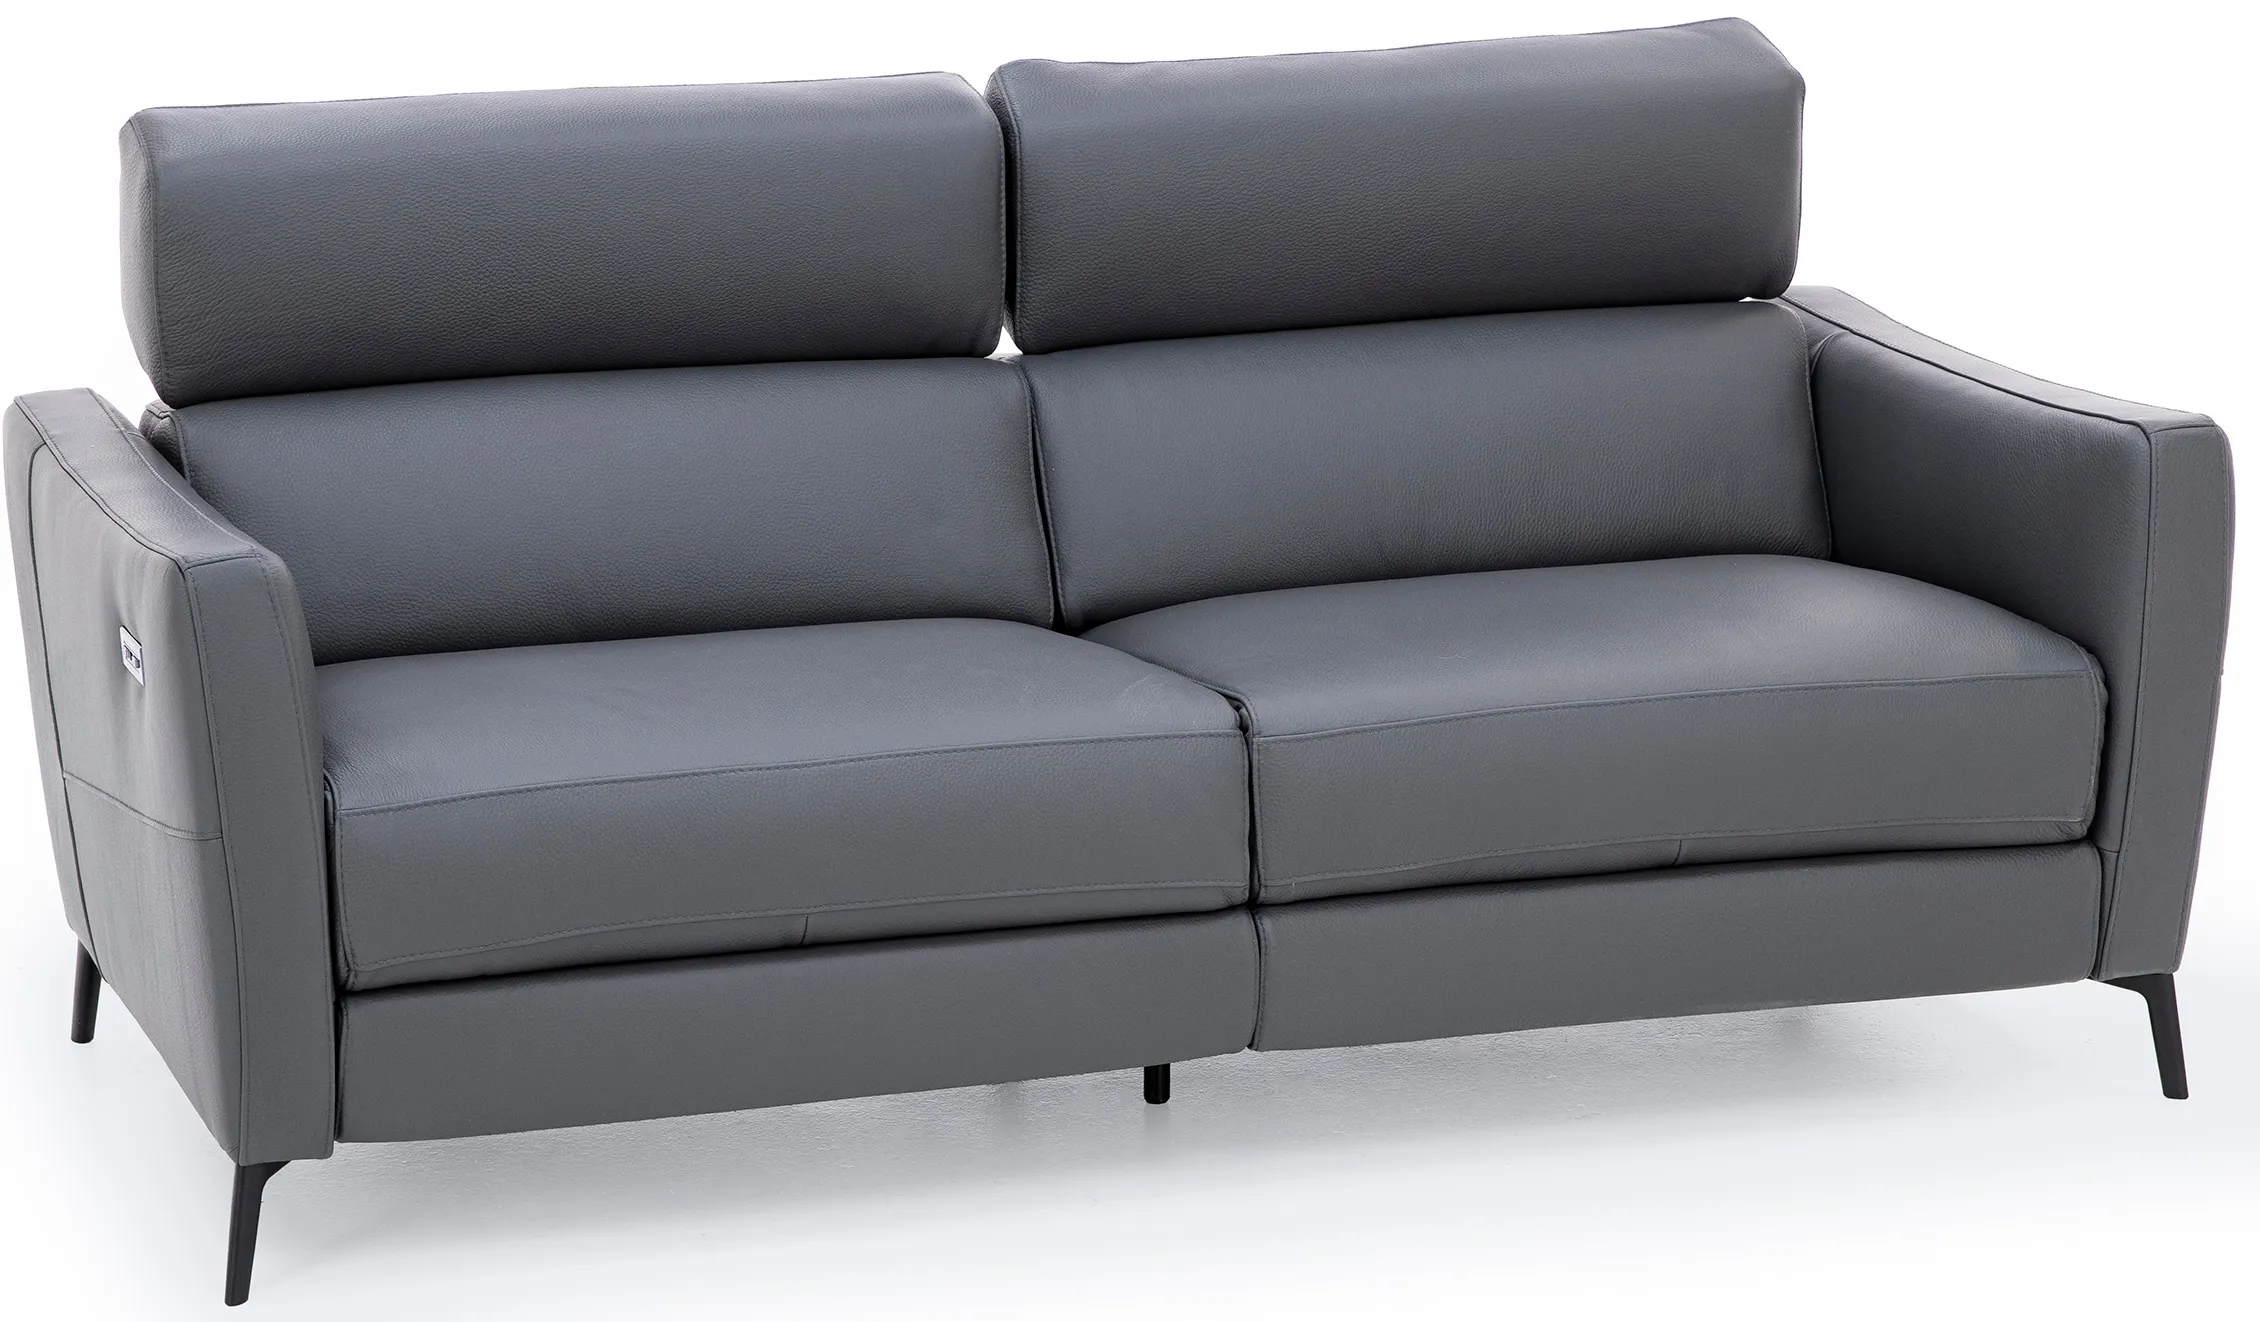 Gabriel Leather Power Headrest Reclining Sofa in Carbon